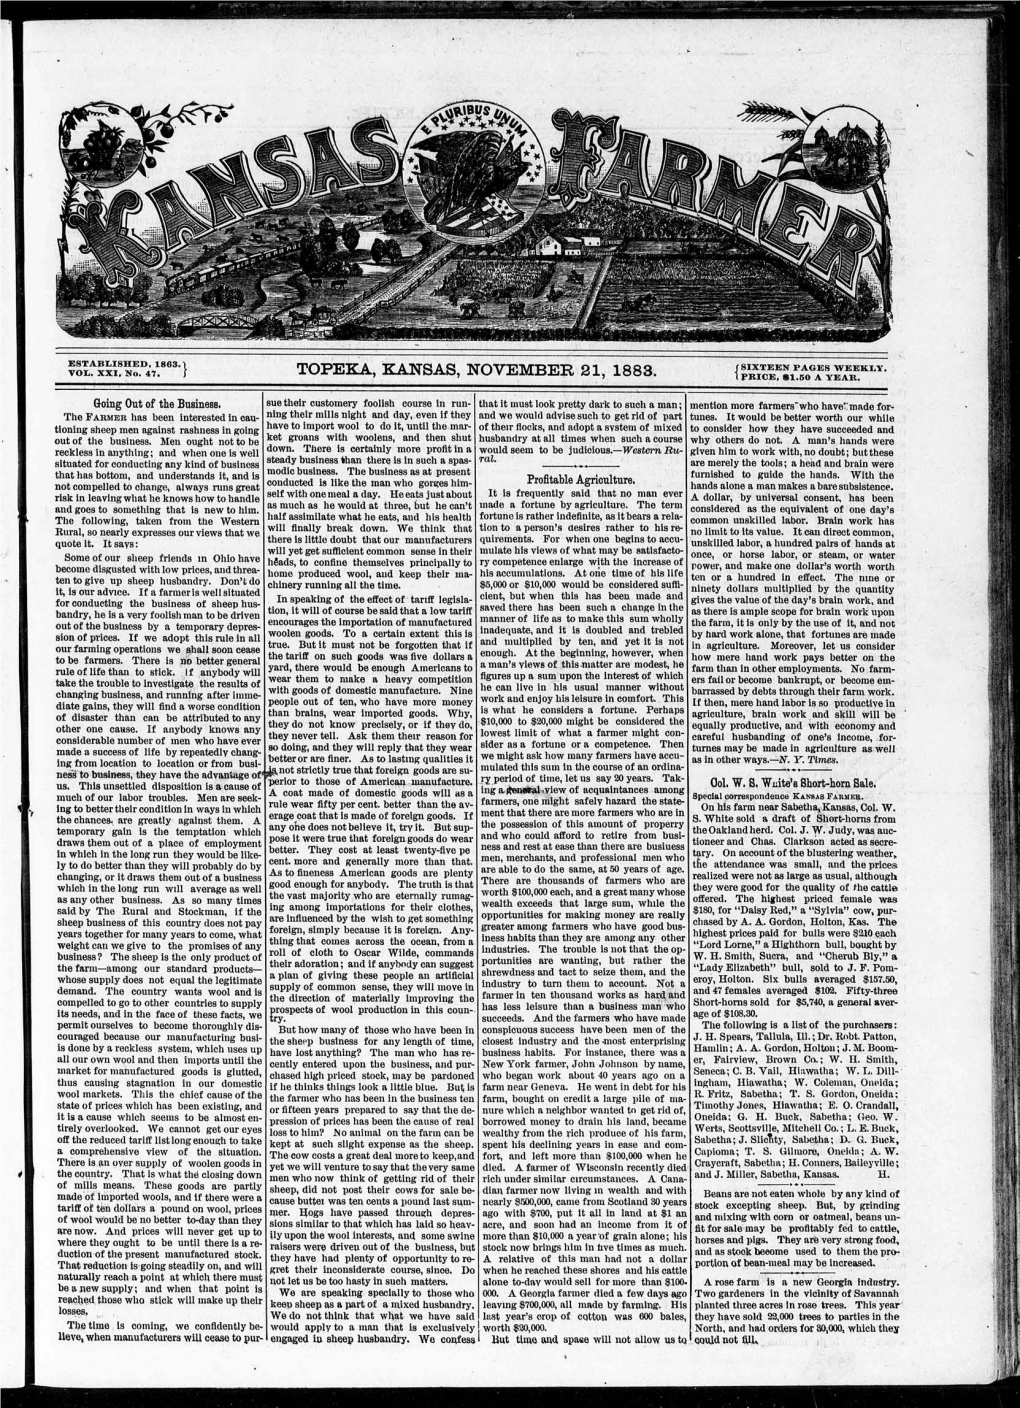 Topeka, ,Kansas, Nove:Mber 21, 1883